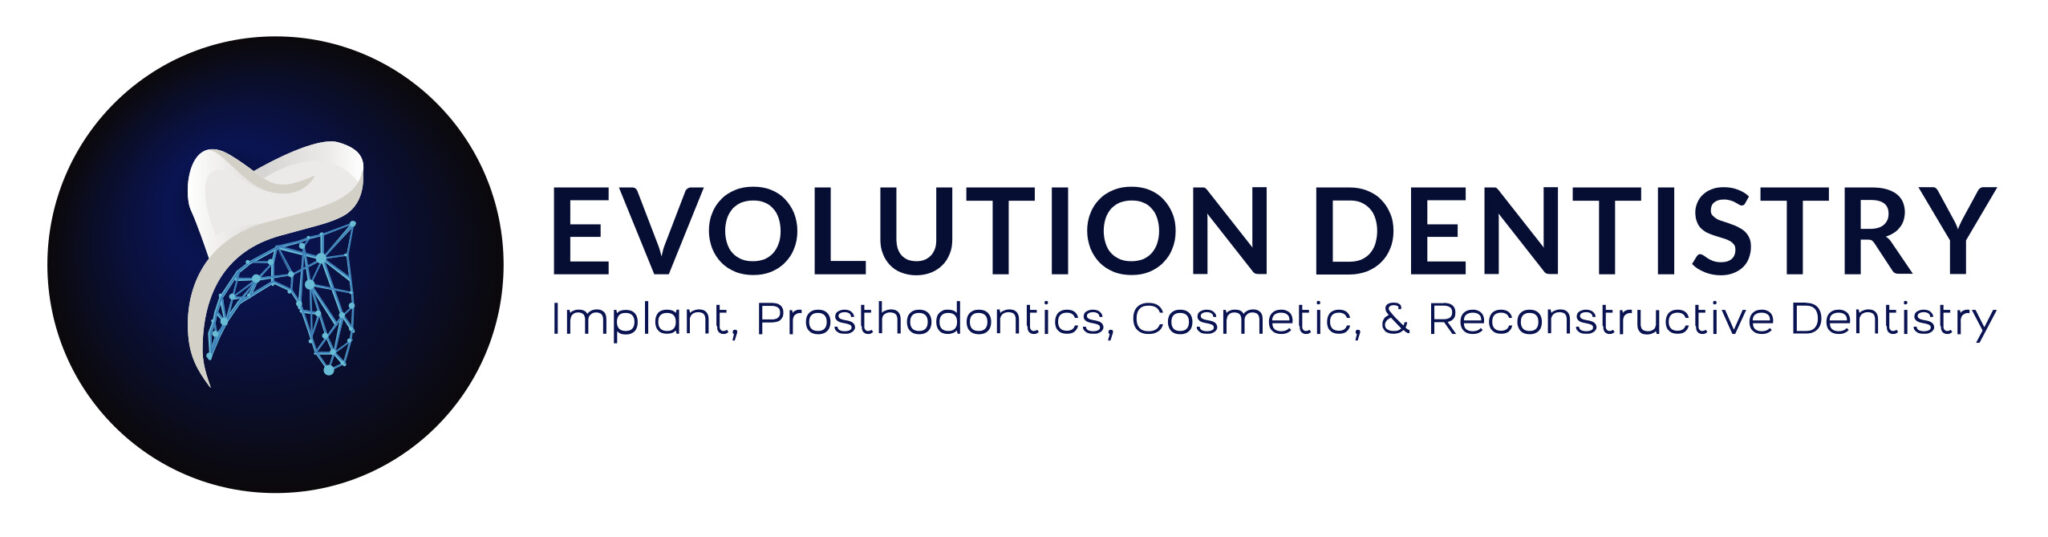 evolution dentistry logo